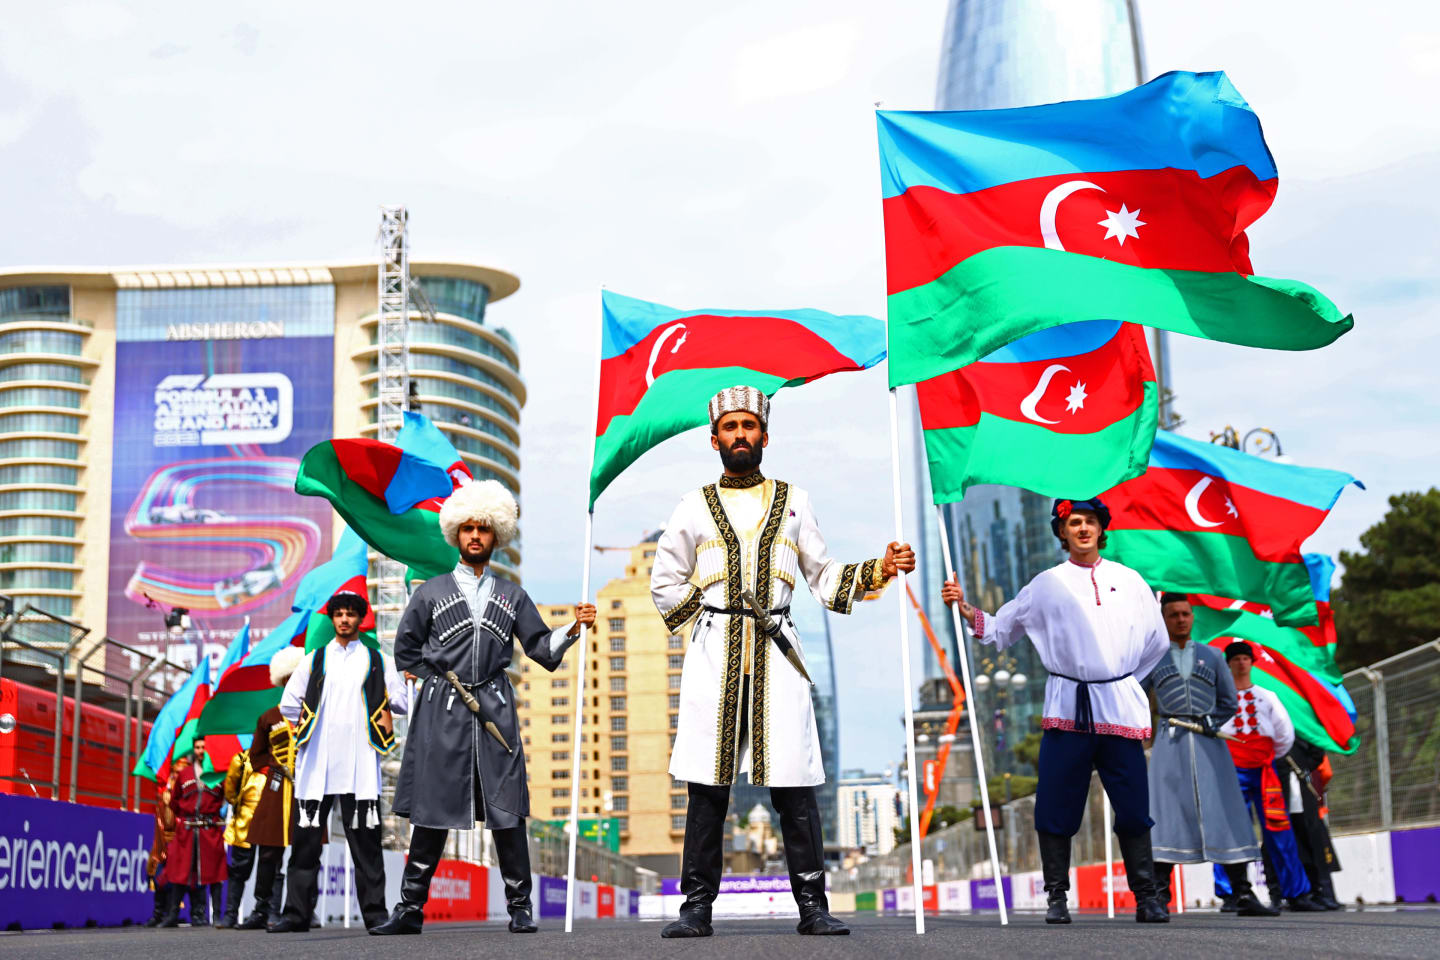 BAKU, AZERBAIJAN - JUNE 06: Performers holding the Azerbaijan flag stand on the grid before the F1